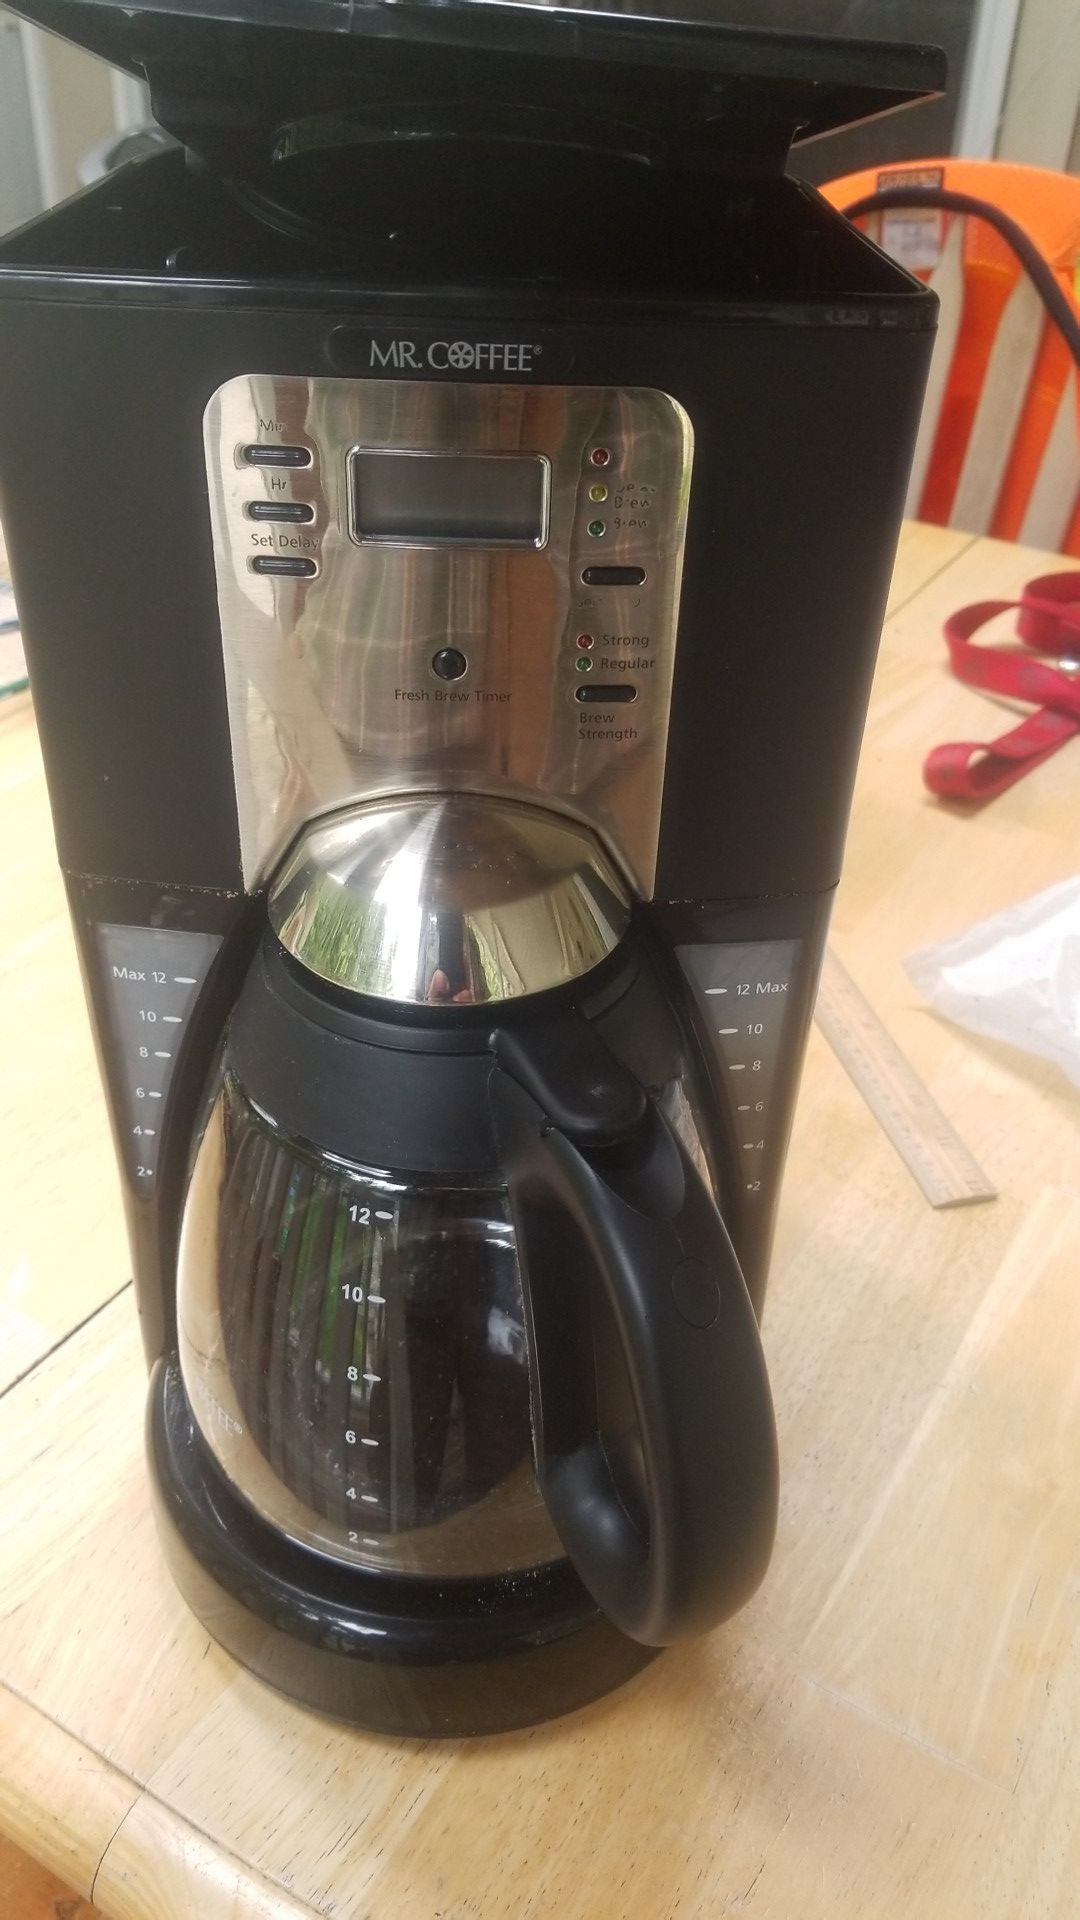 Mr Coffee digital coffee maker